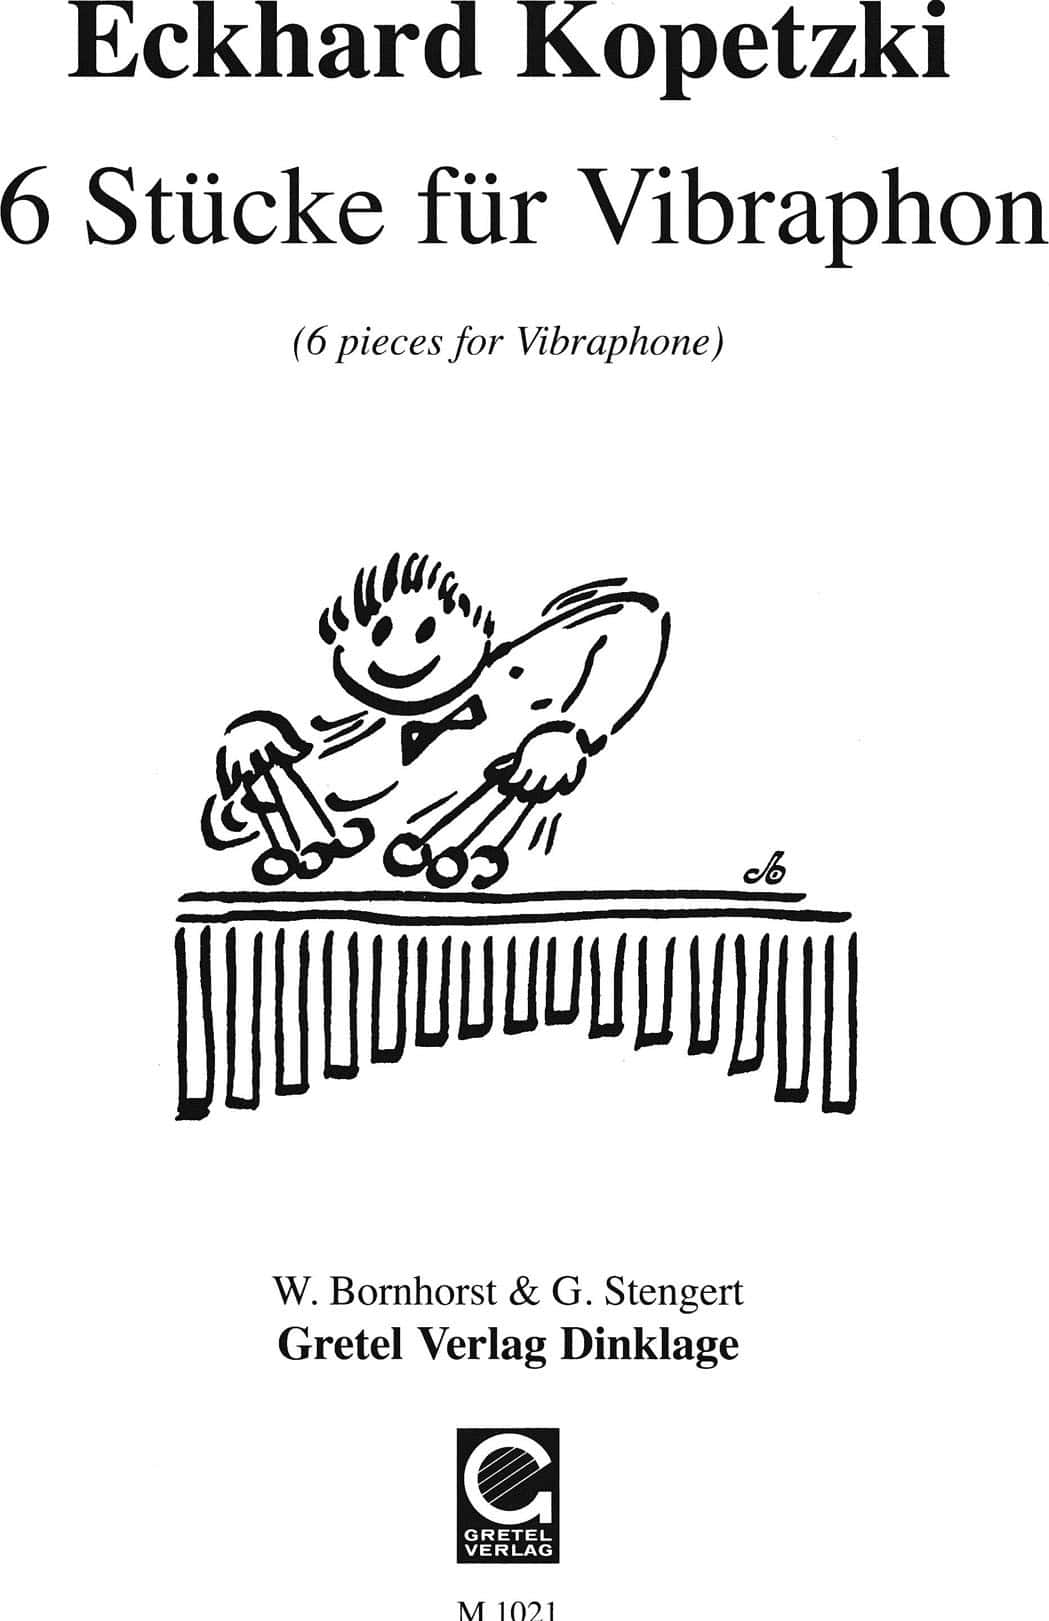 6 Stucke fur Vibraphon (6 pieces for Vibraphone) by Eckhard Kopetzki